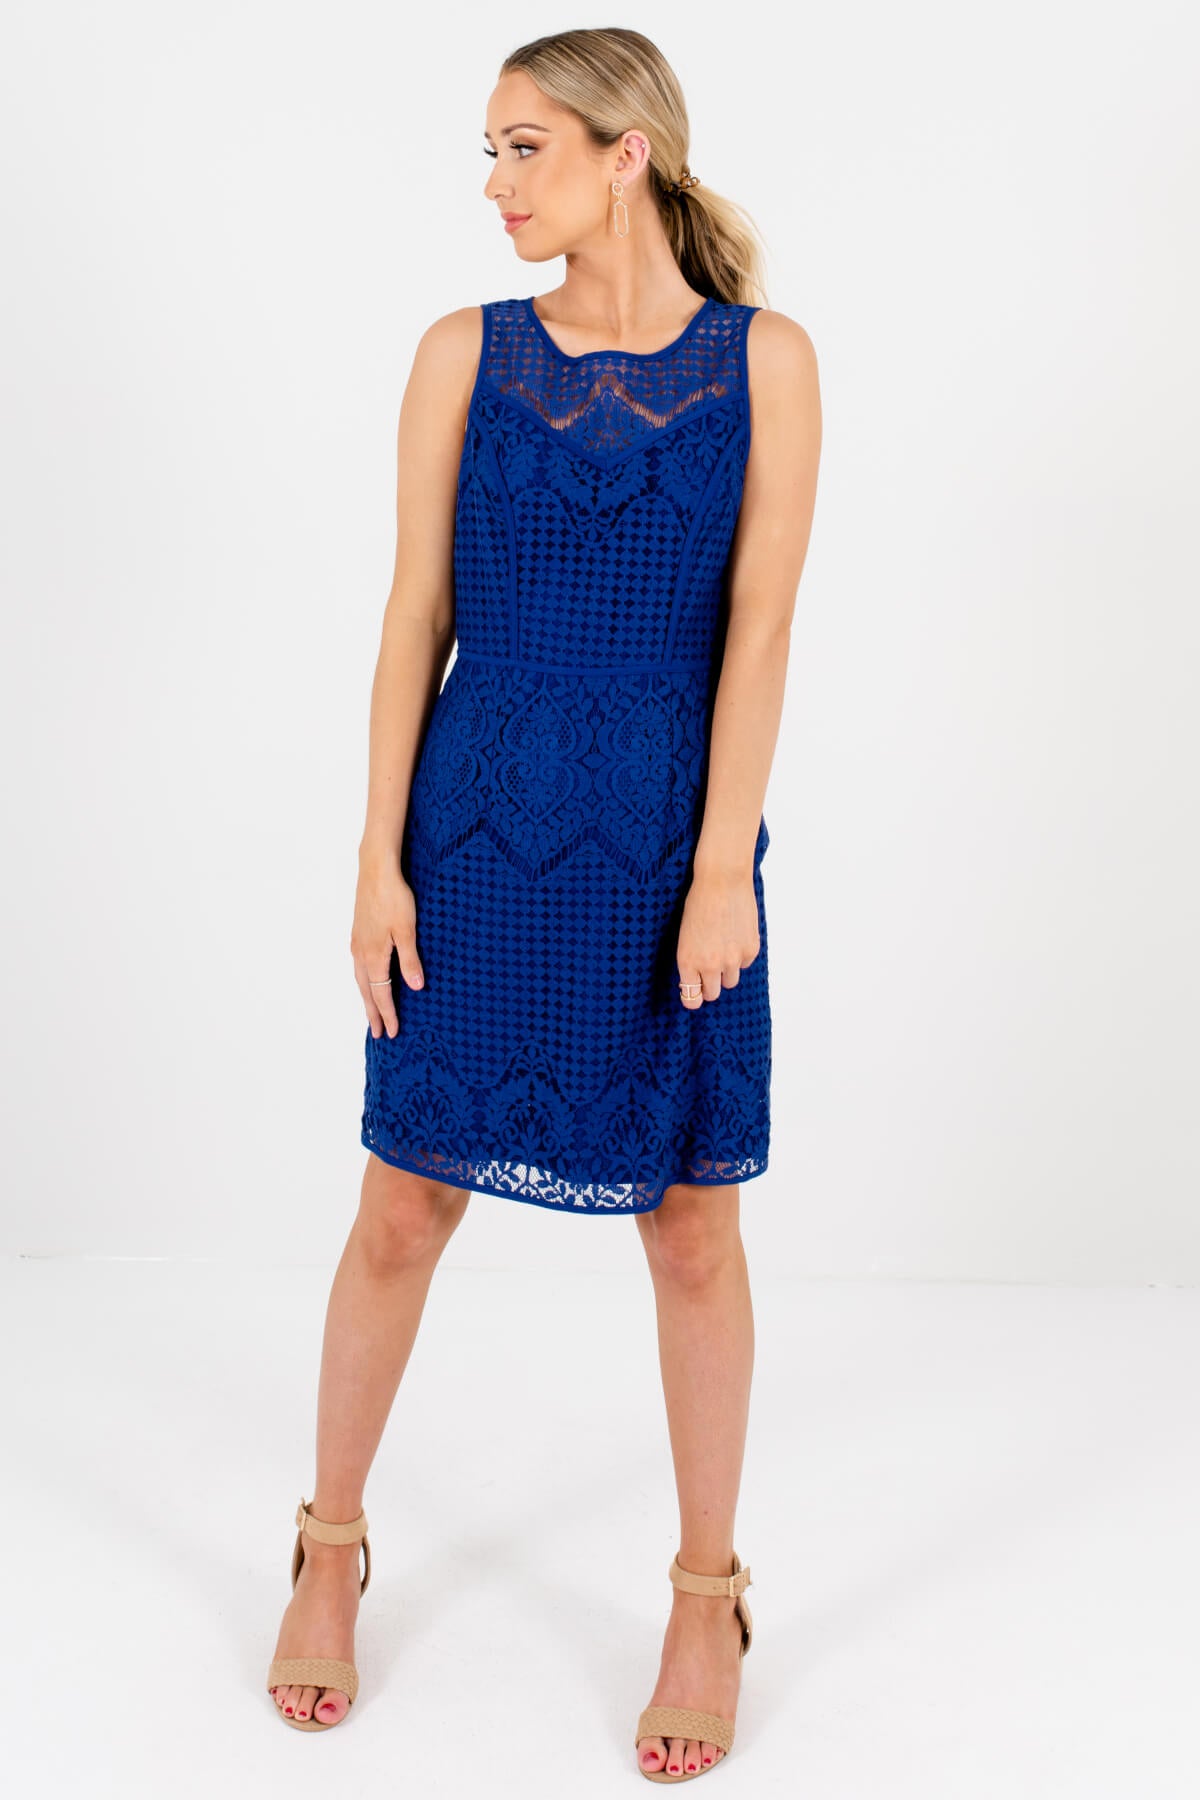 Blue Lace Mini Dresses Affordable Online Boutique Party Outfits